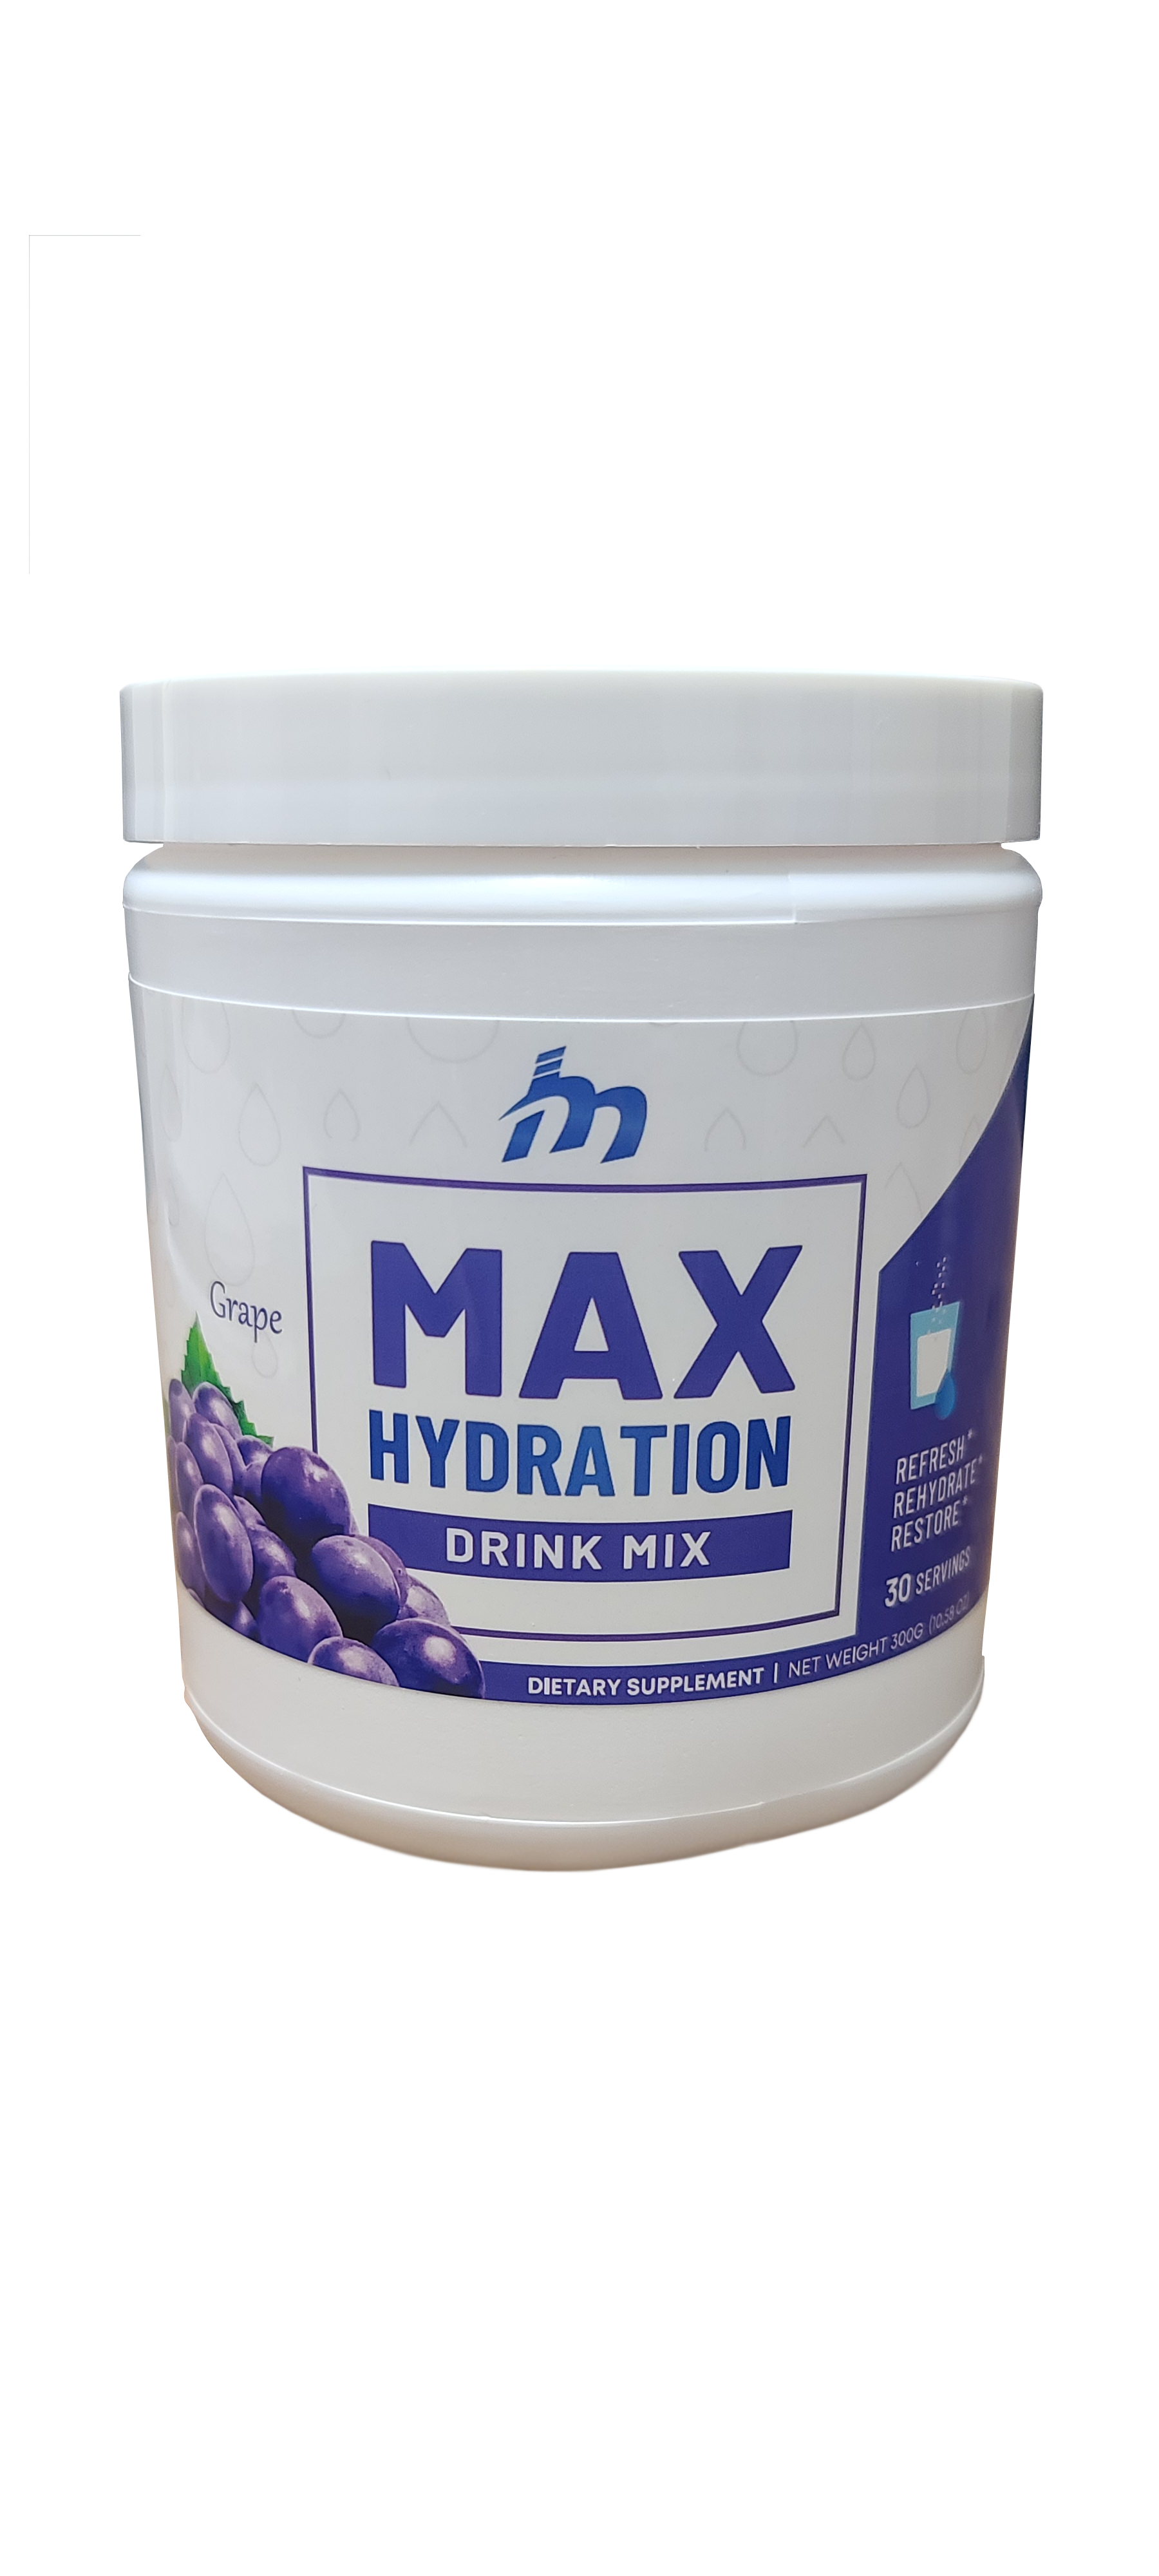 NEW Max Hydration Grape Tub - 30 servings